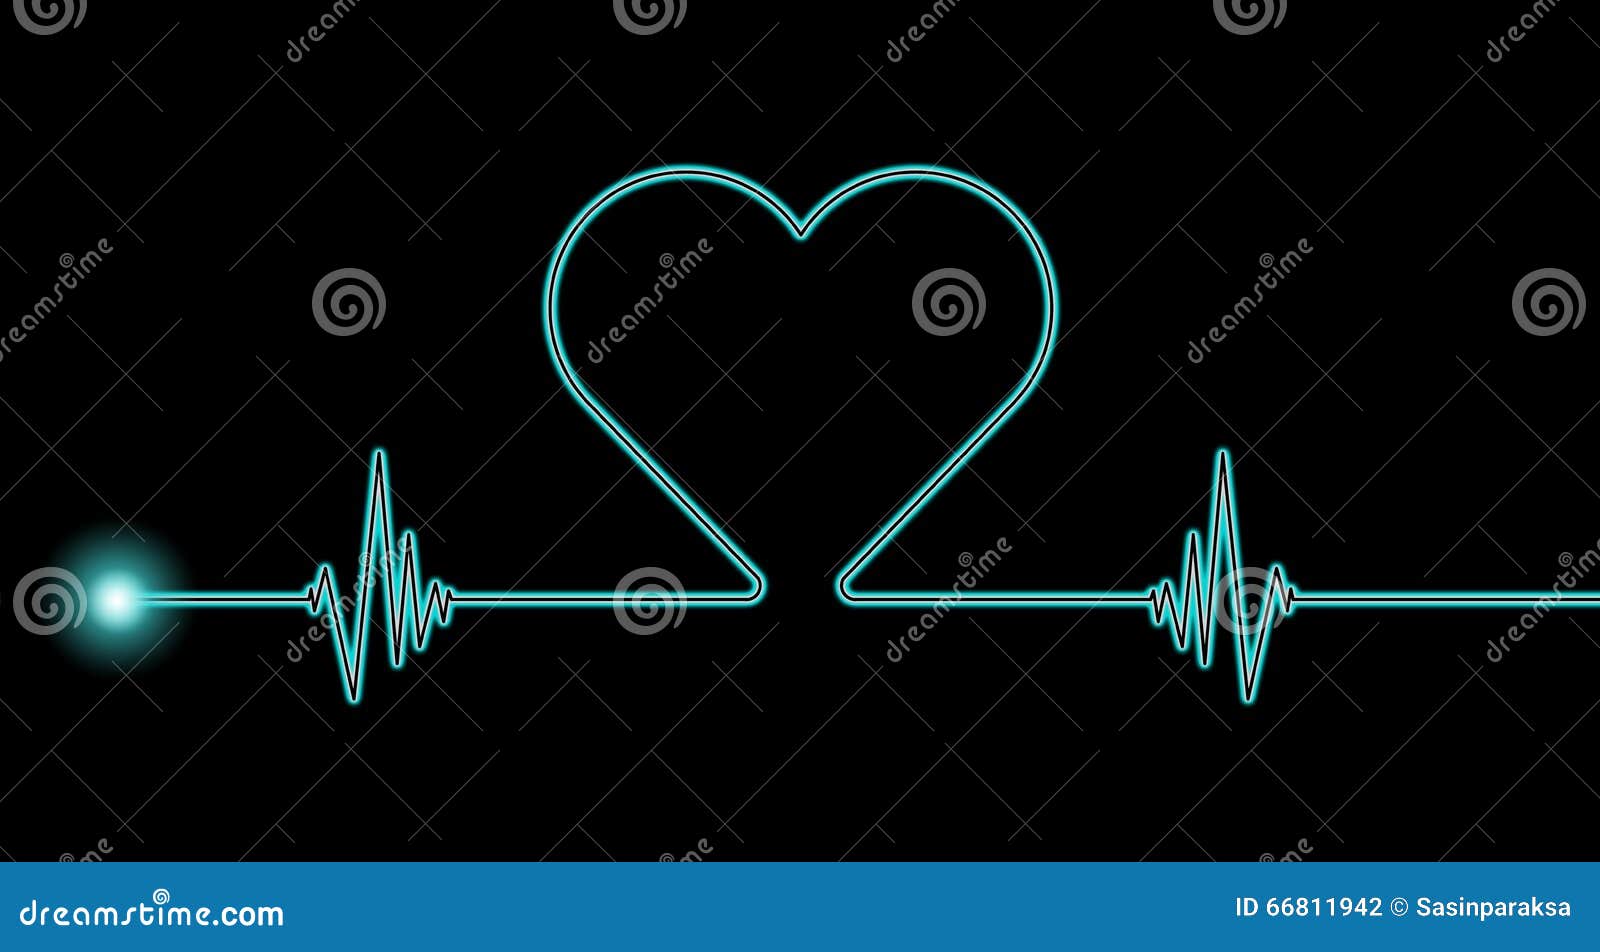 heart rate rhythm